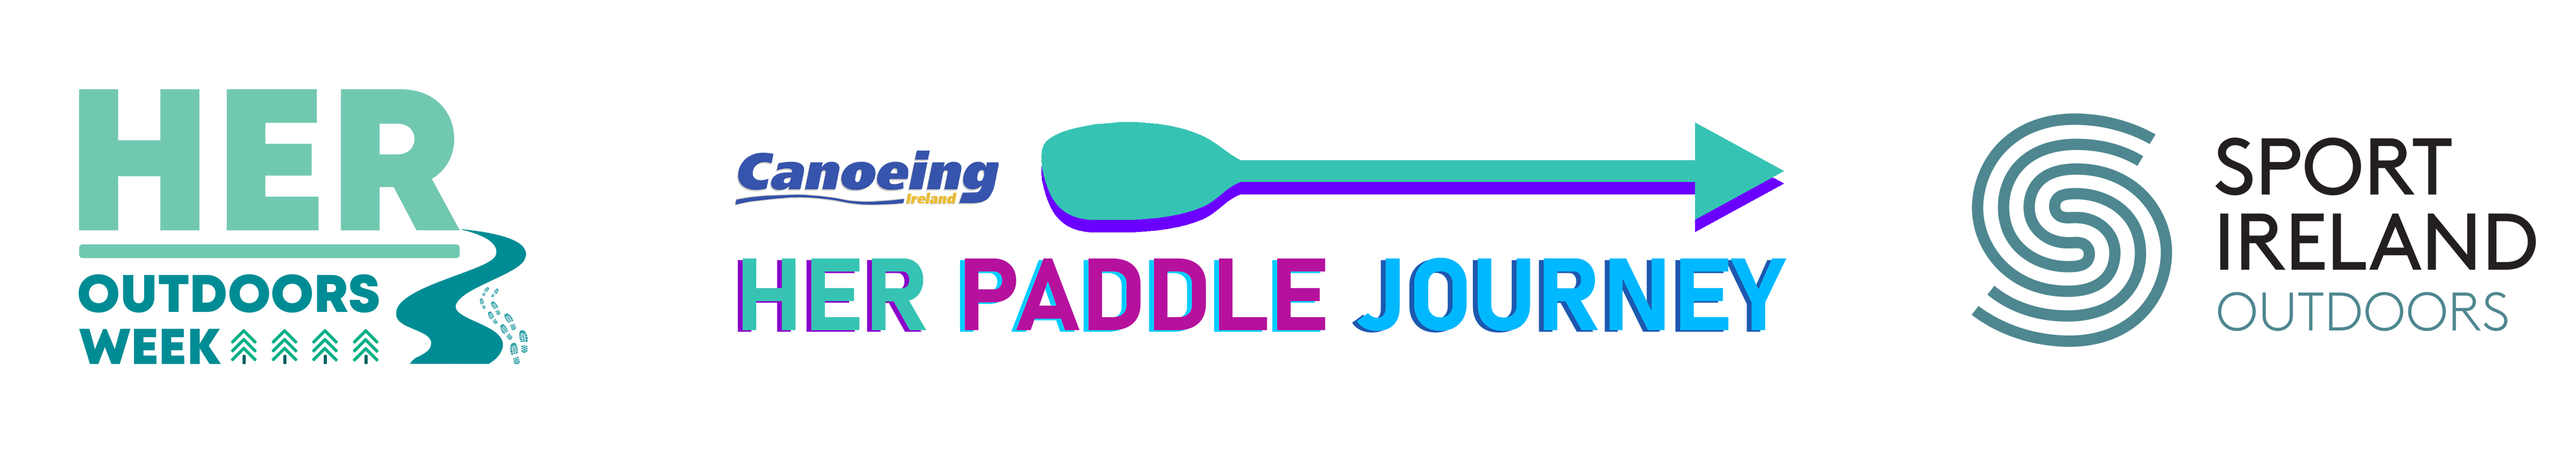 HER Paddle Journey header image